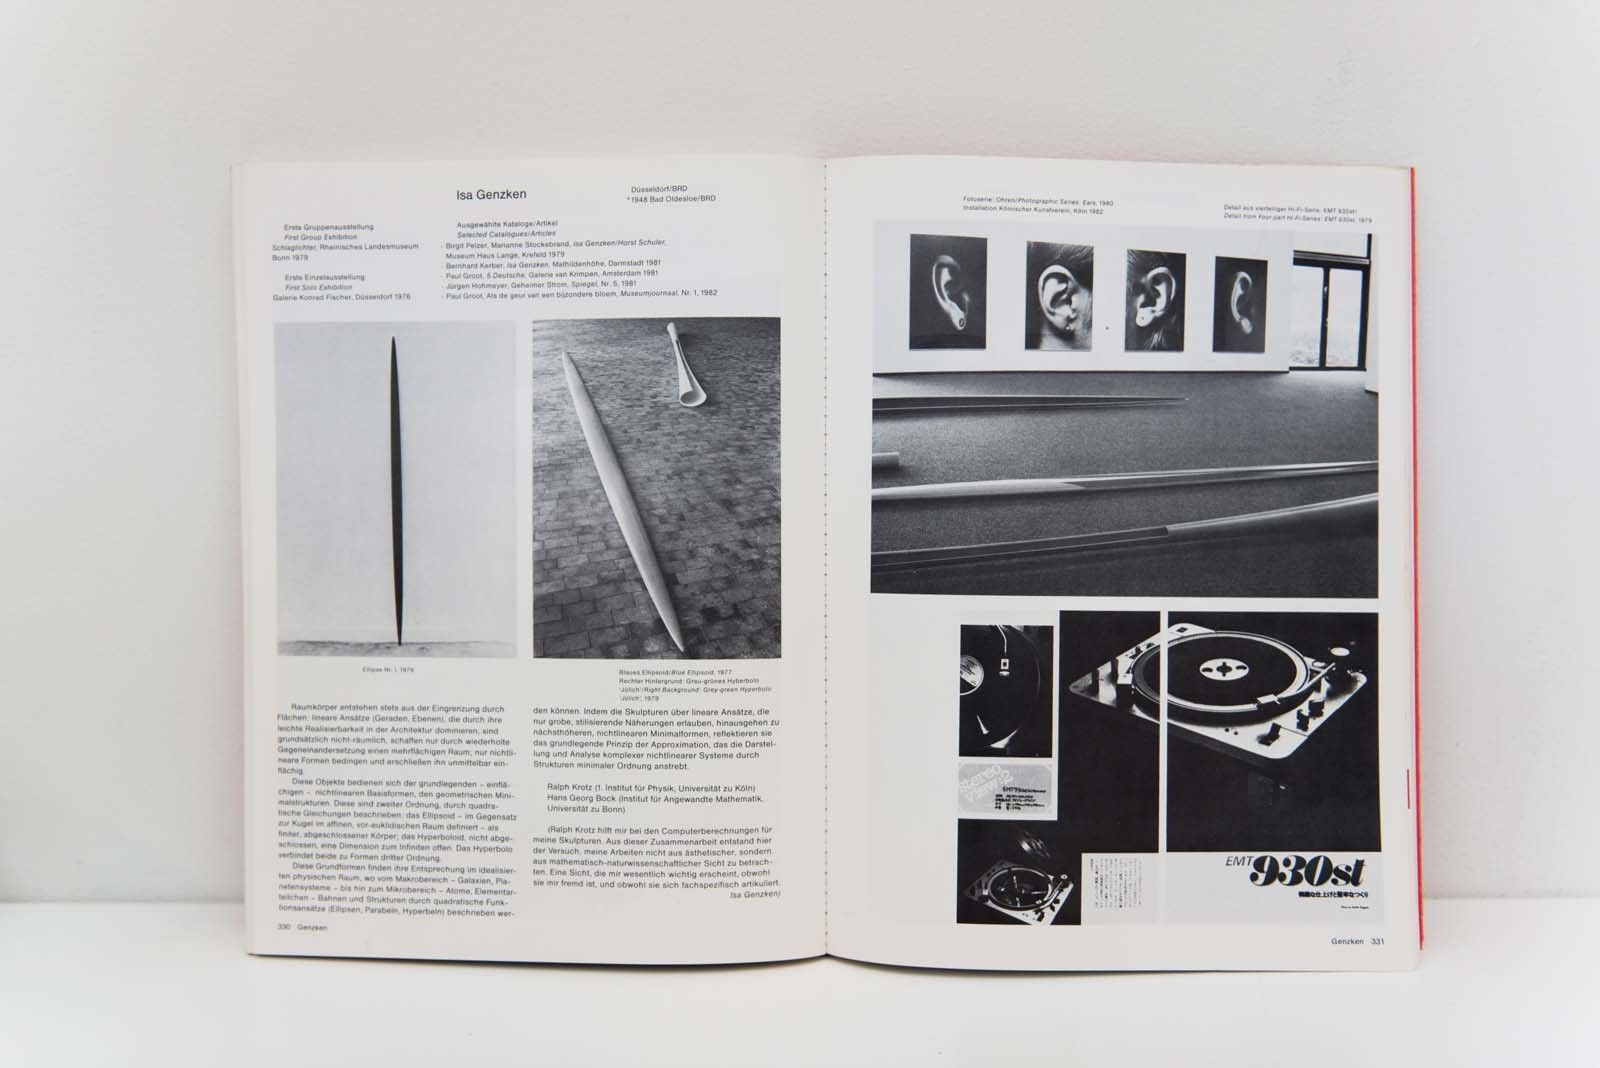 Fig 7. Image of Isa Genzken’s exhibition at Documenta 7. Moving Thinking, 2015. Photo: Fabian Landewee